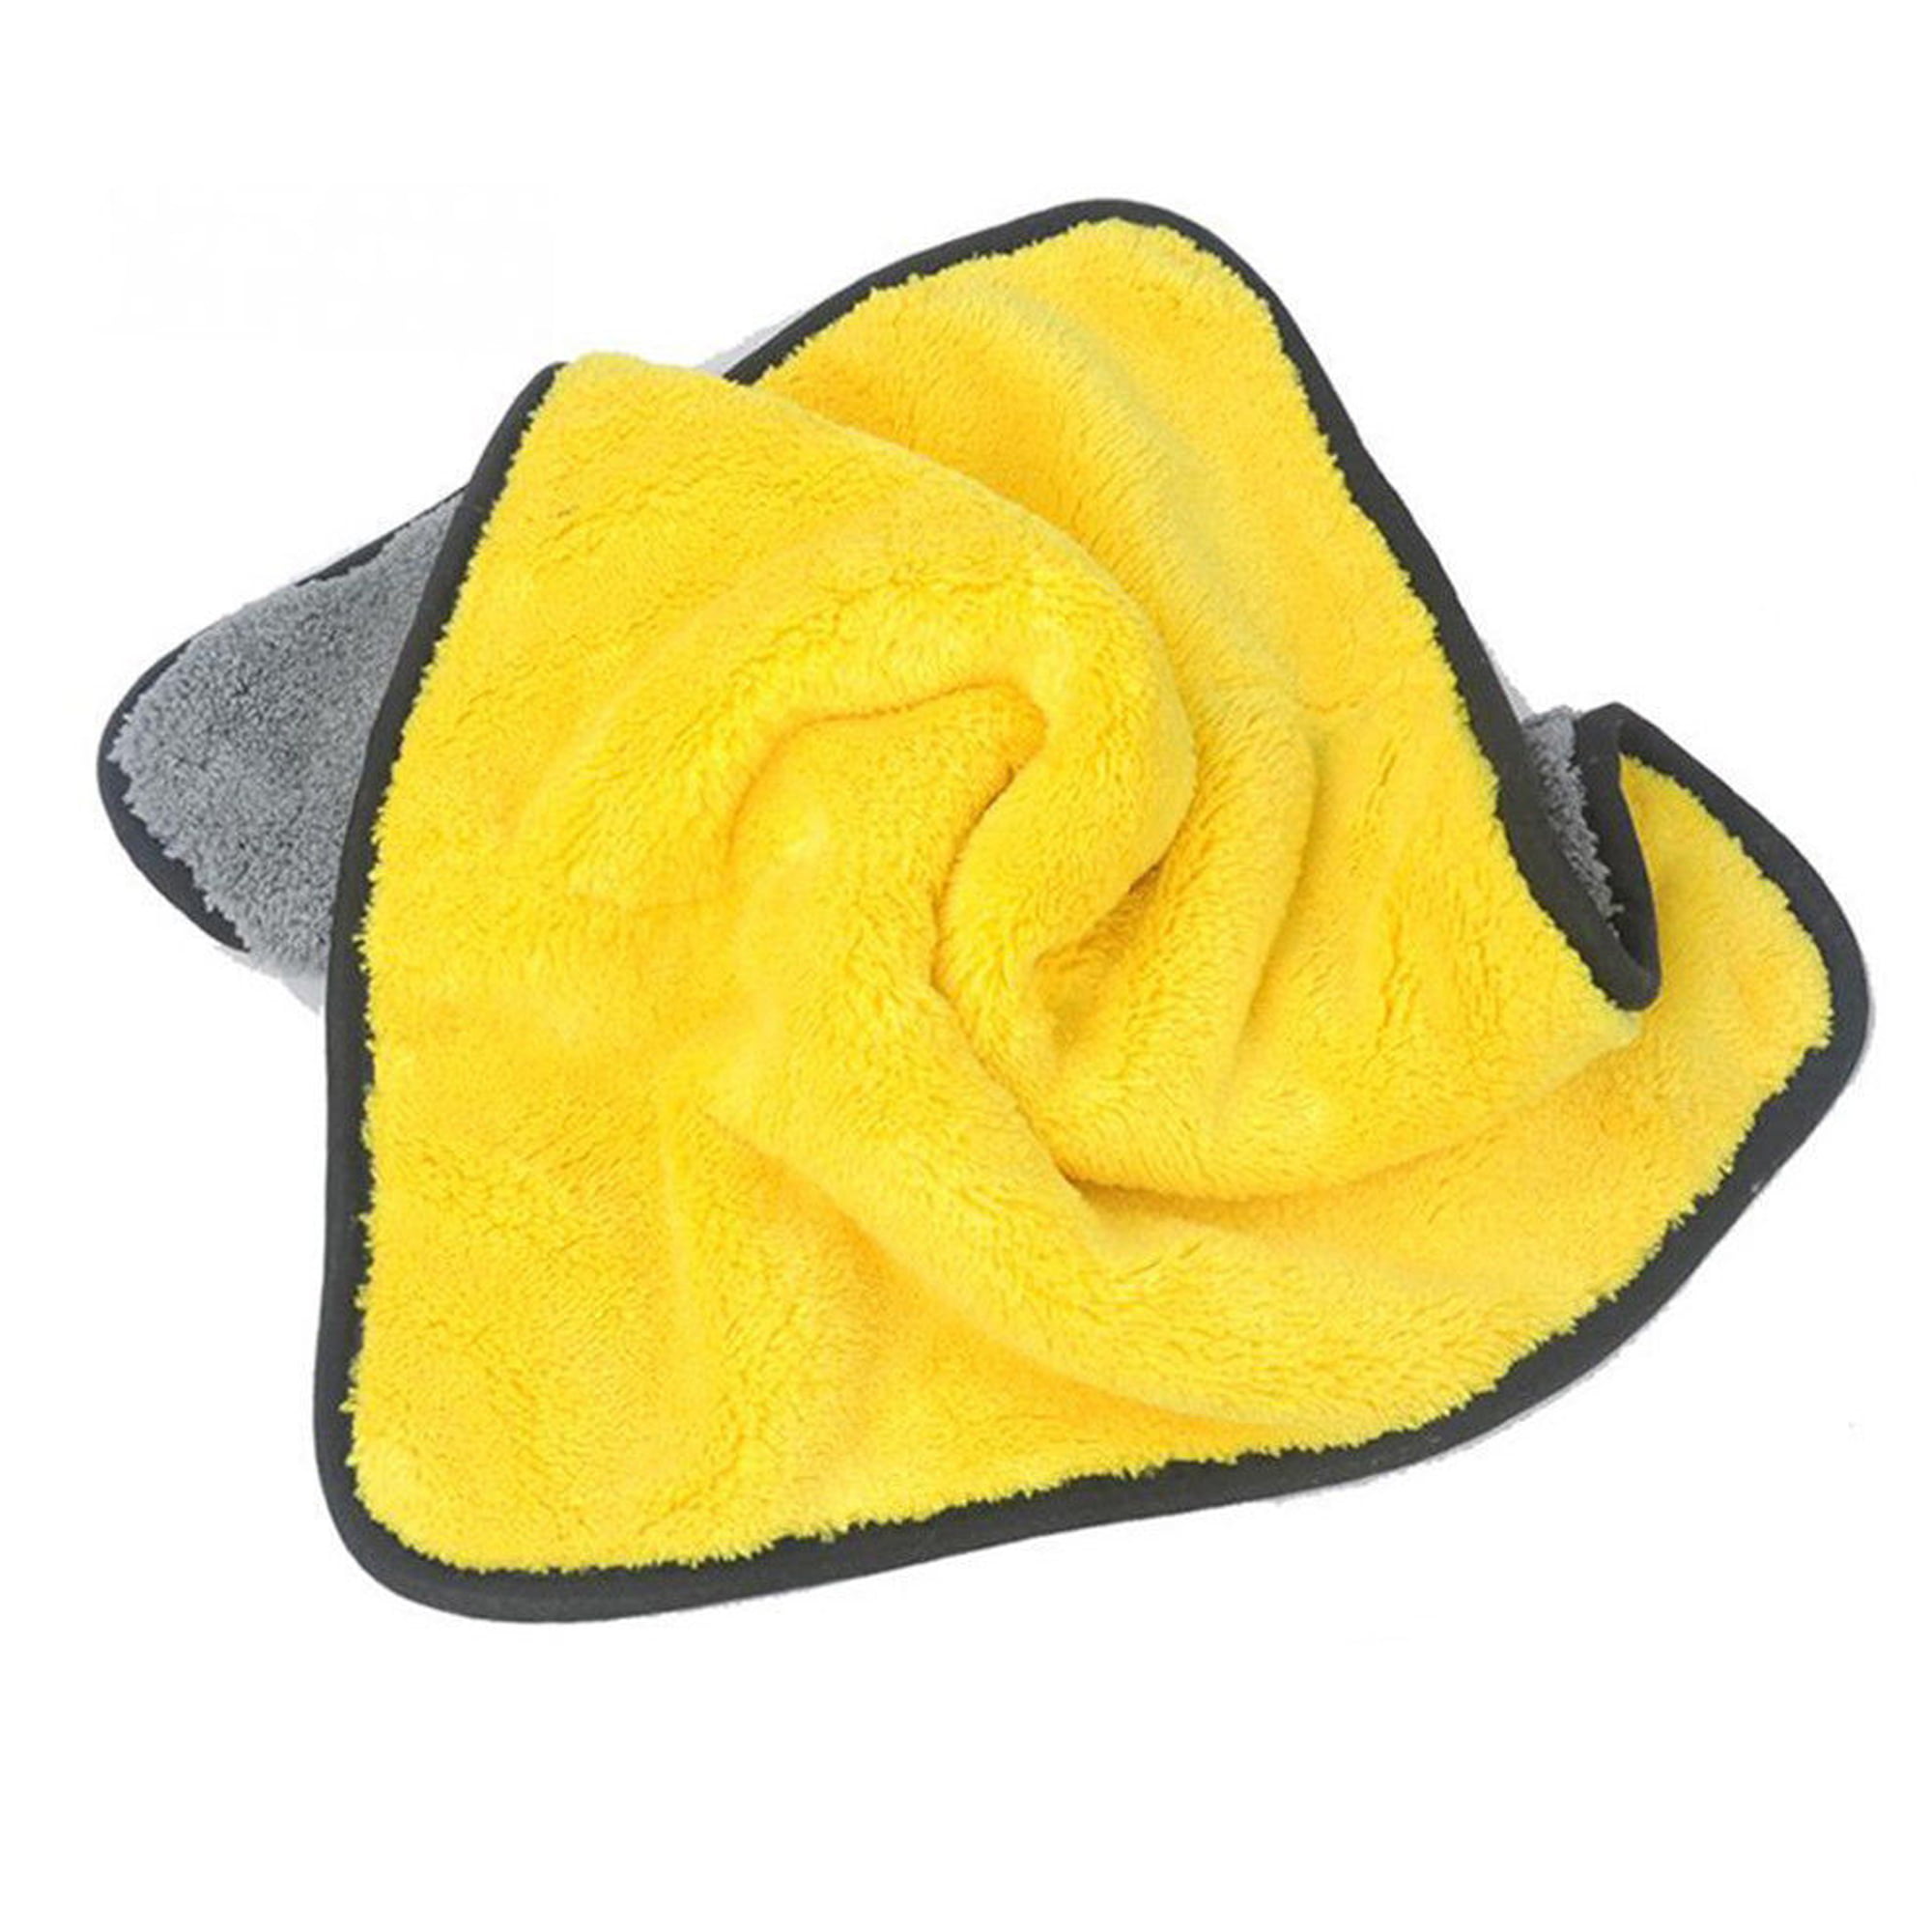 1pc Car Clean Care Polishing Wash Towel Plush Microfiber Drying Cloth Hot Sale